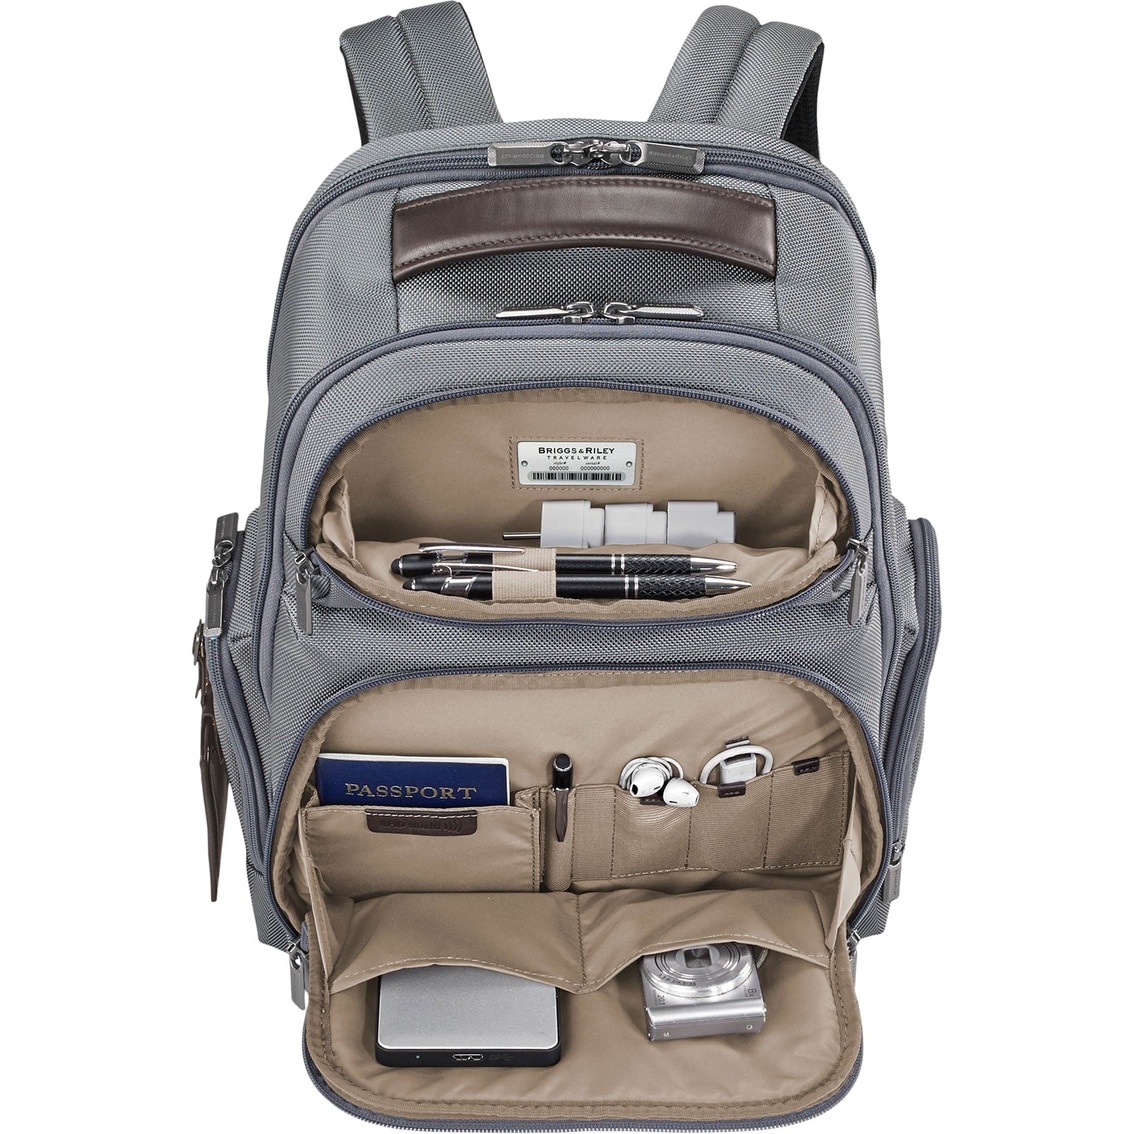 Briggs & Riley Medium Cargo Backpack Review